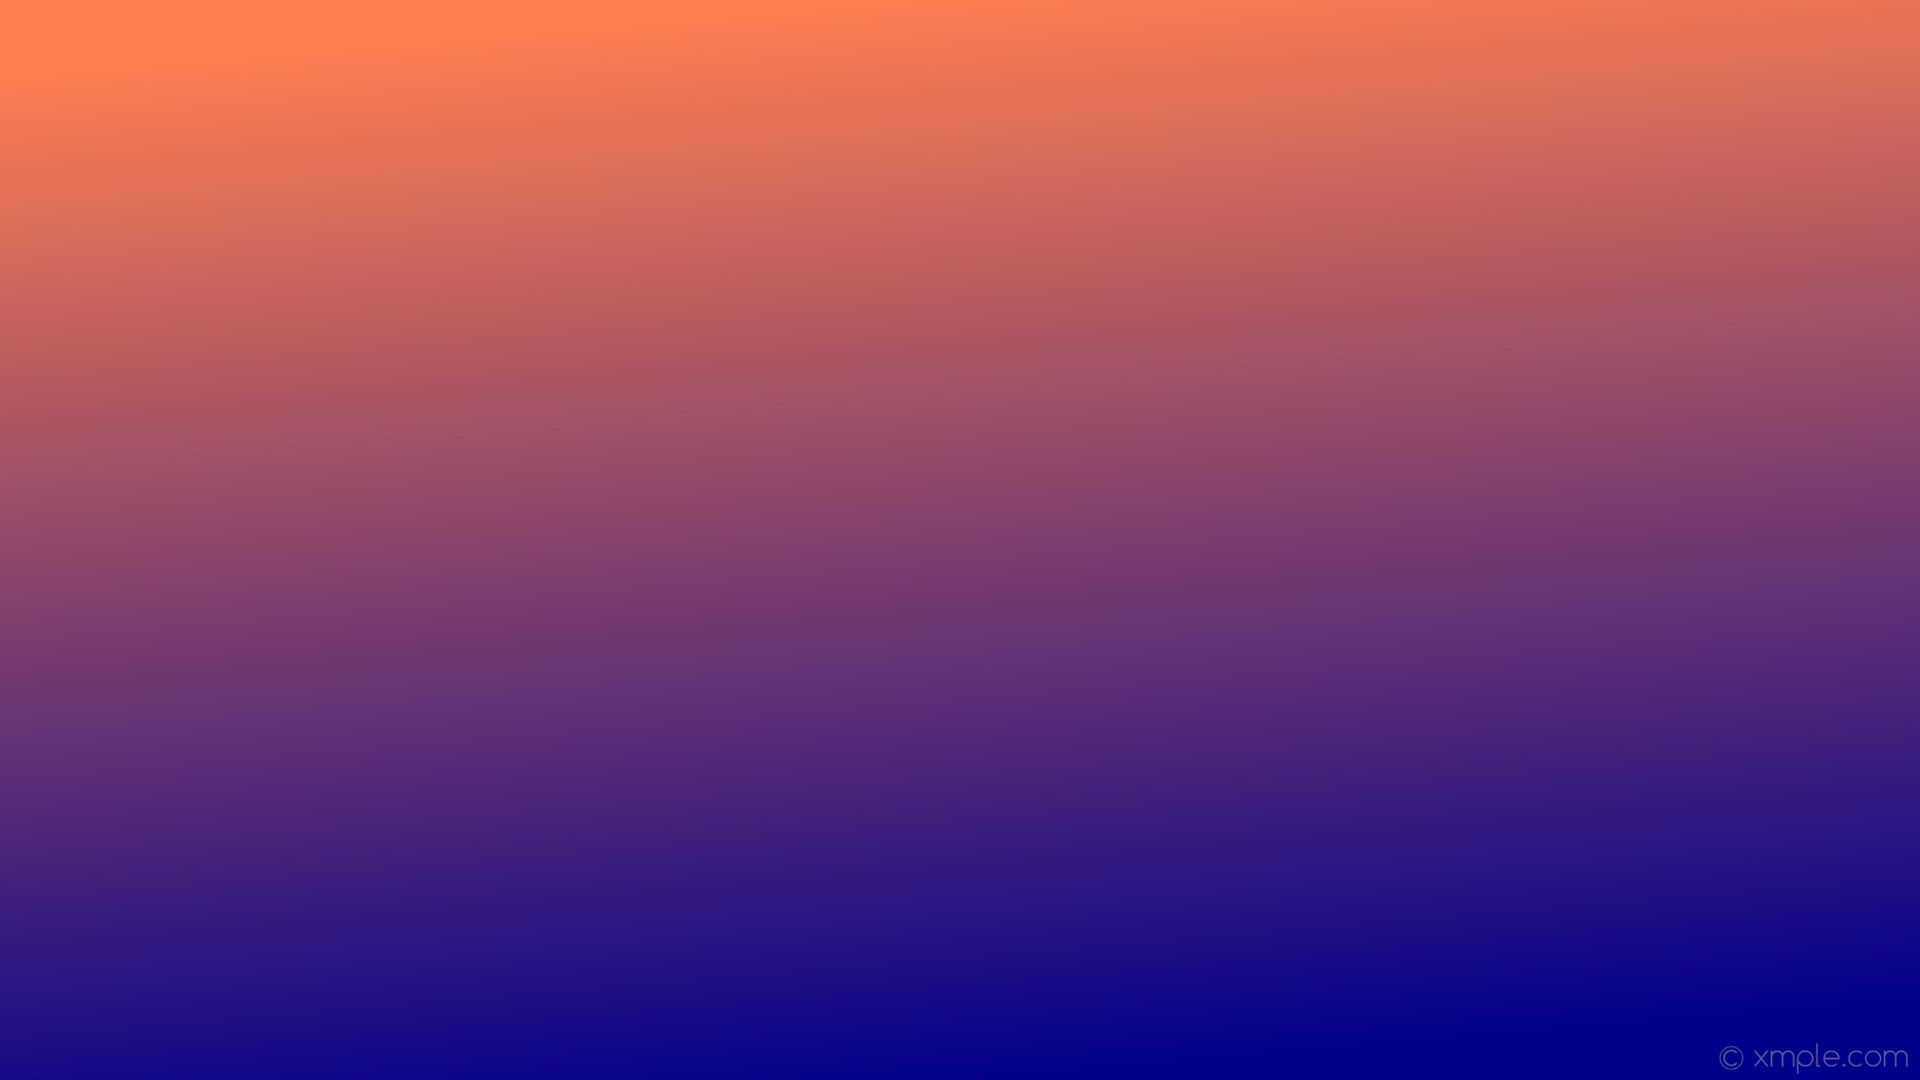 1920x1080 wallpaper gradient blue orange linear dark blue coral #00008b #ff7f50 285Â°